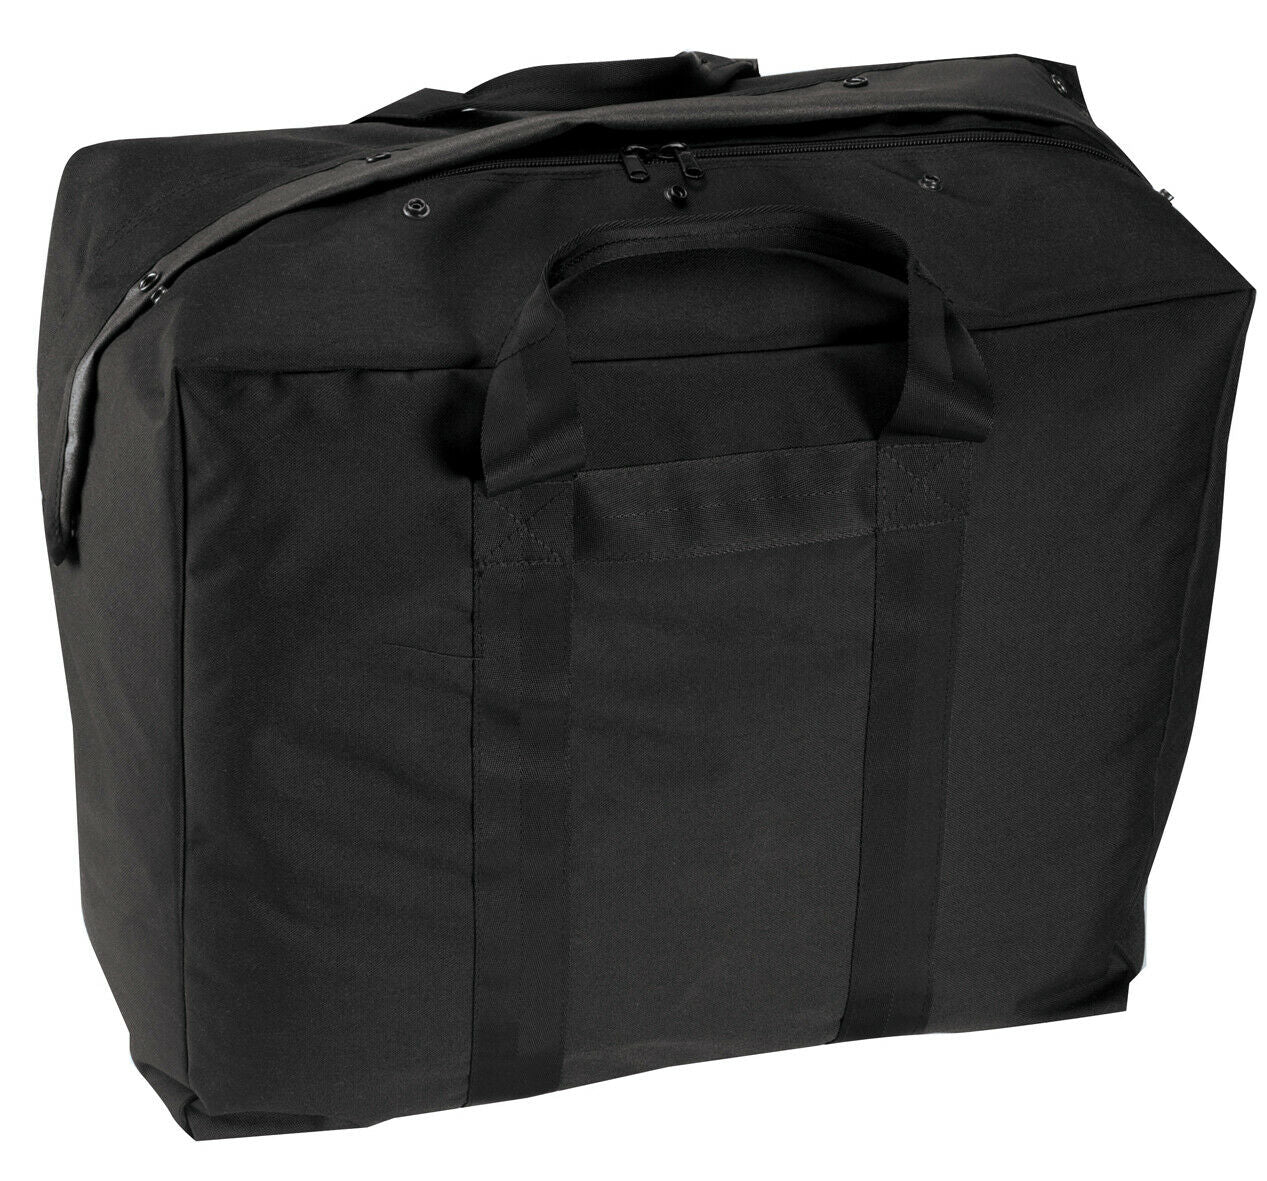 Rothco Enhanced Large Aviator Kit Bag - Black